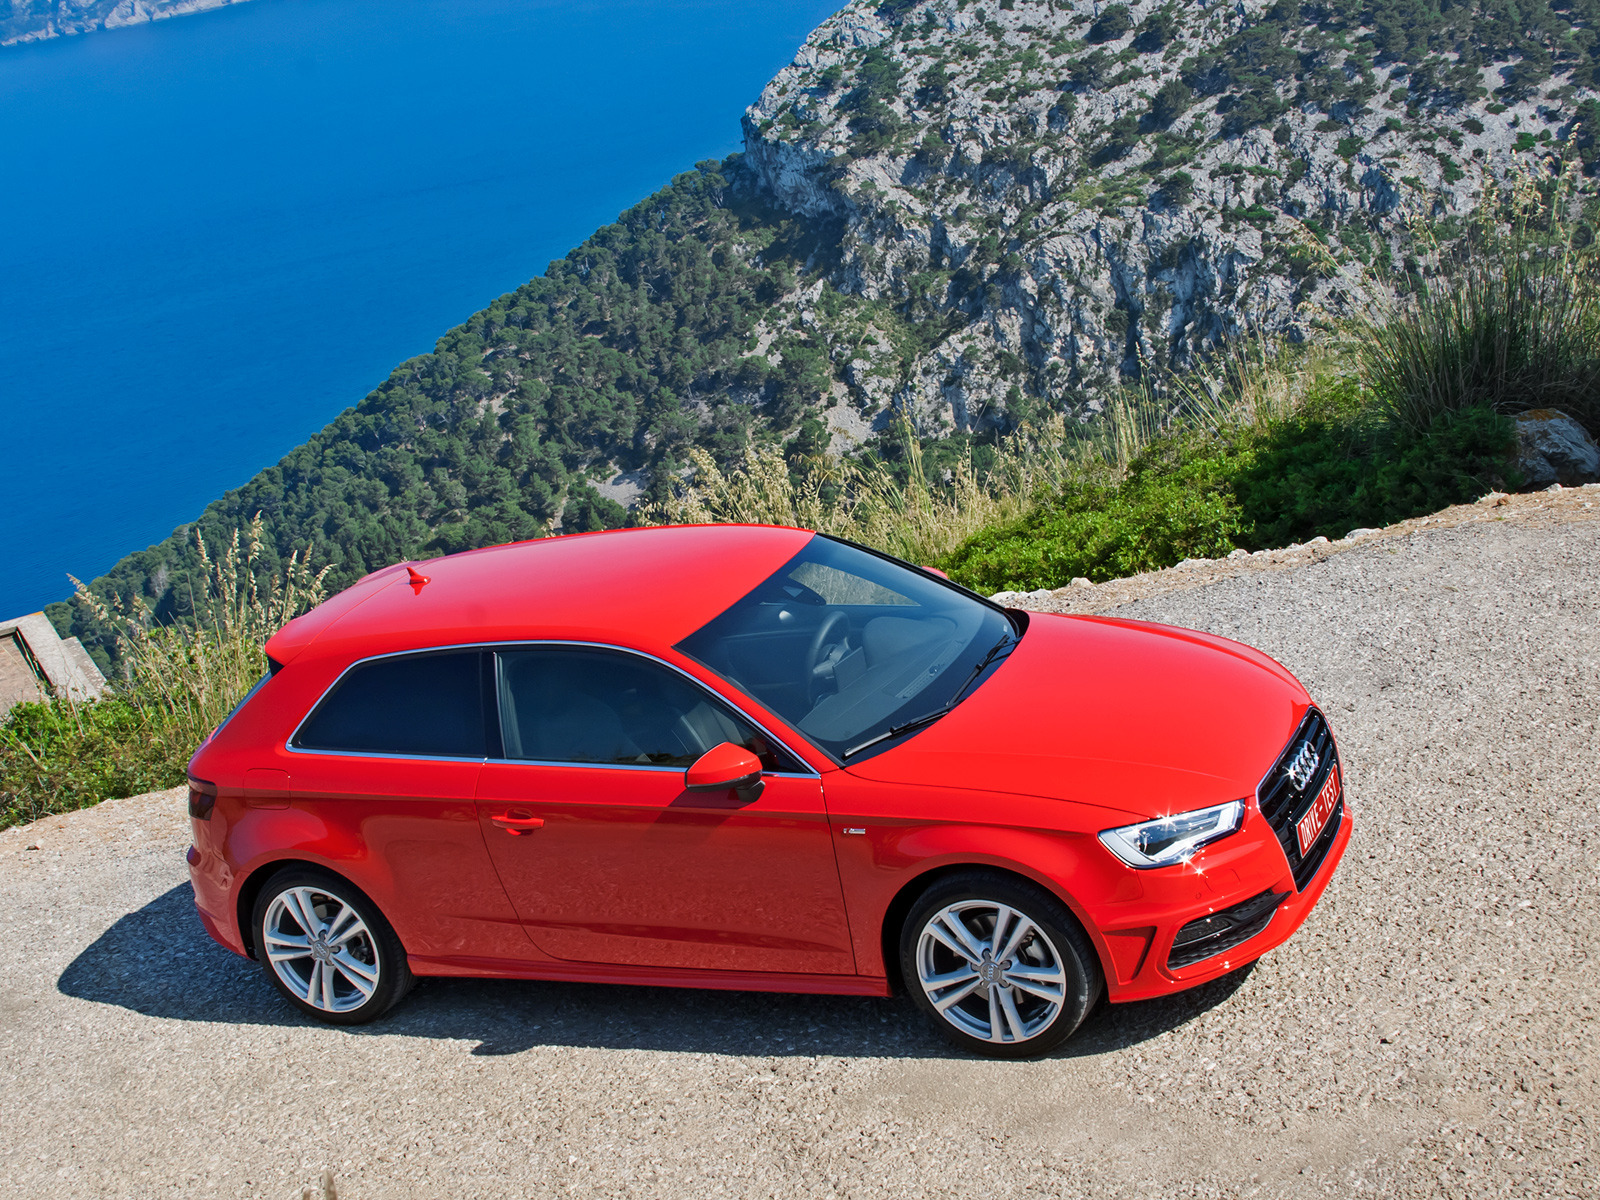 Где собирают Audi A3 седан: места производства